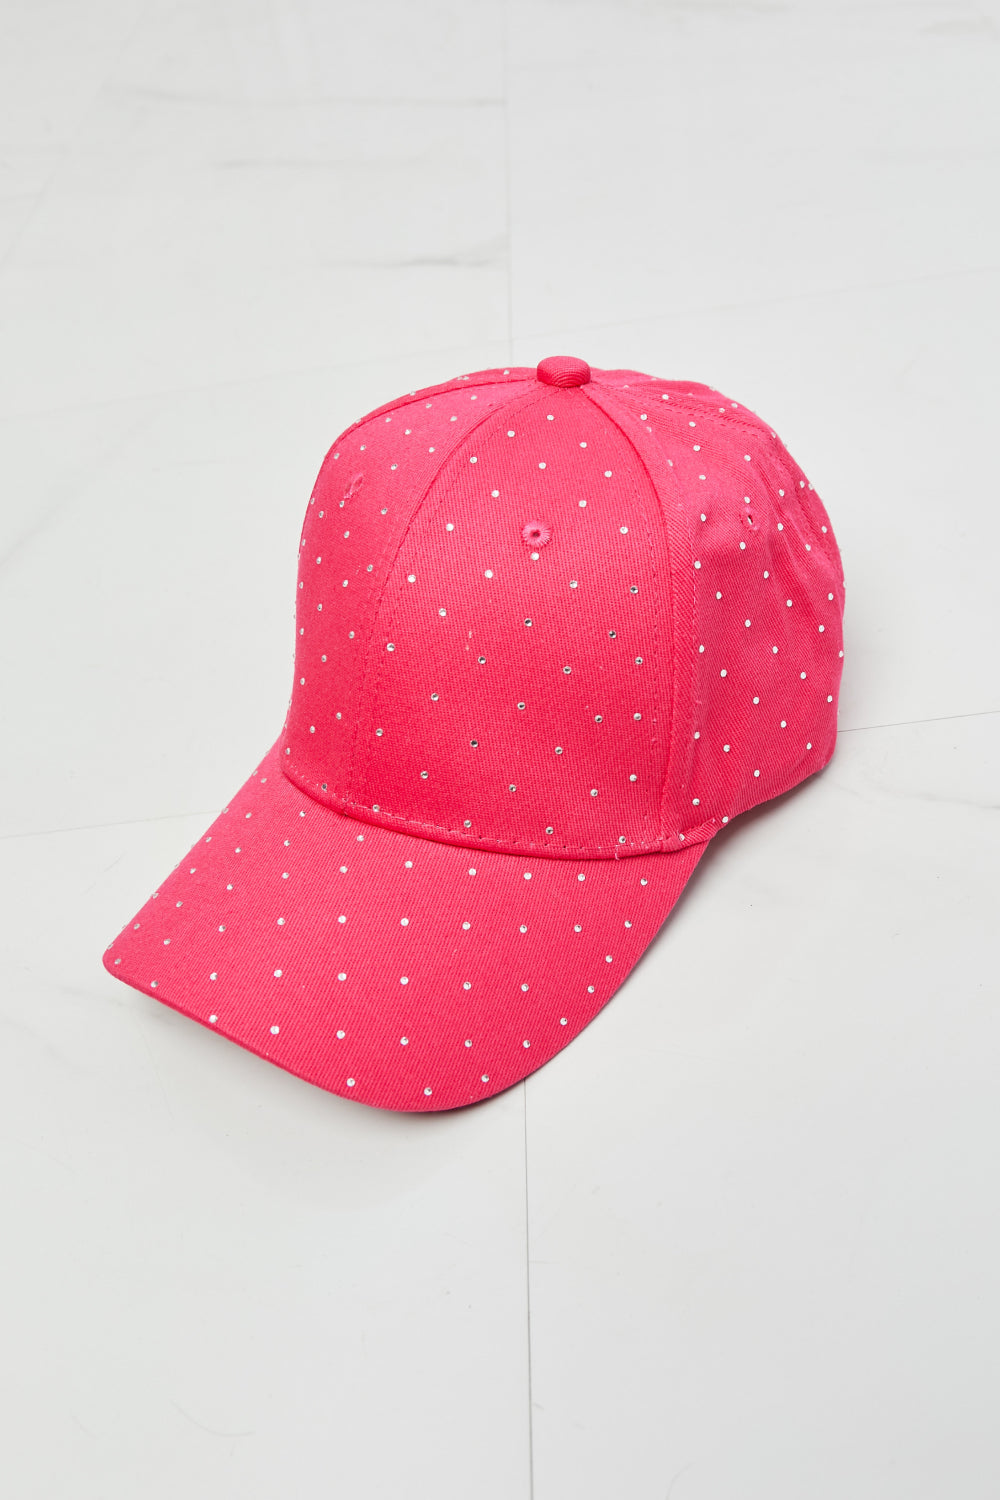 Neon Pink Rhinestone Crystal Hat Classic Basbeball Cap